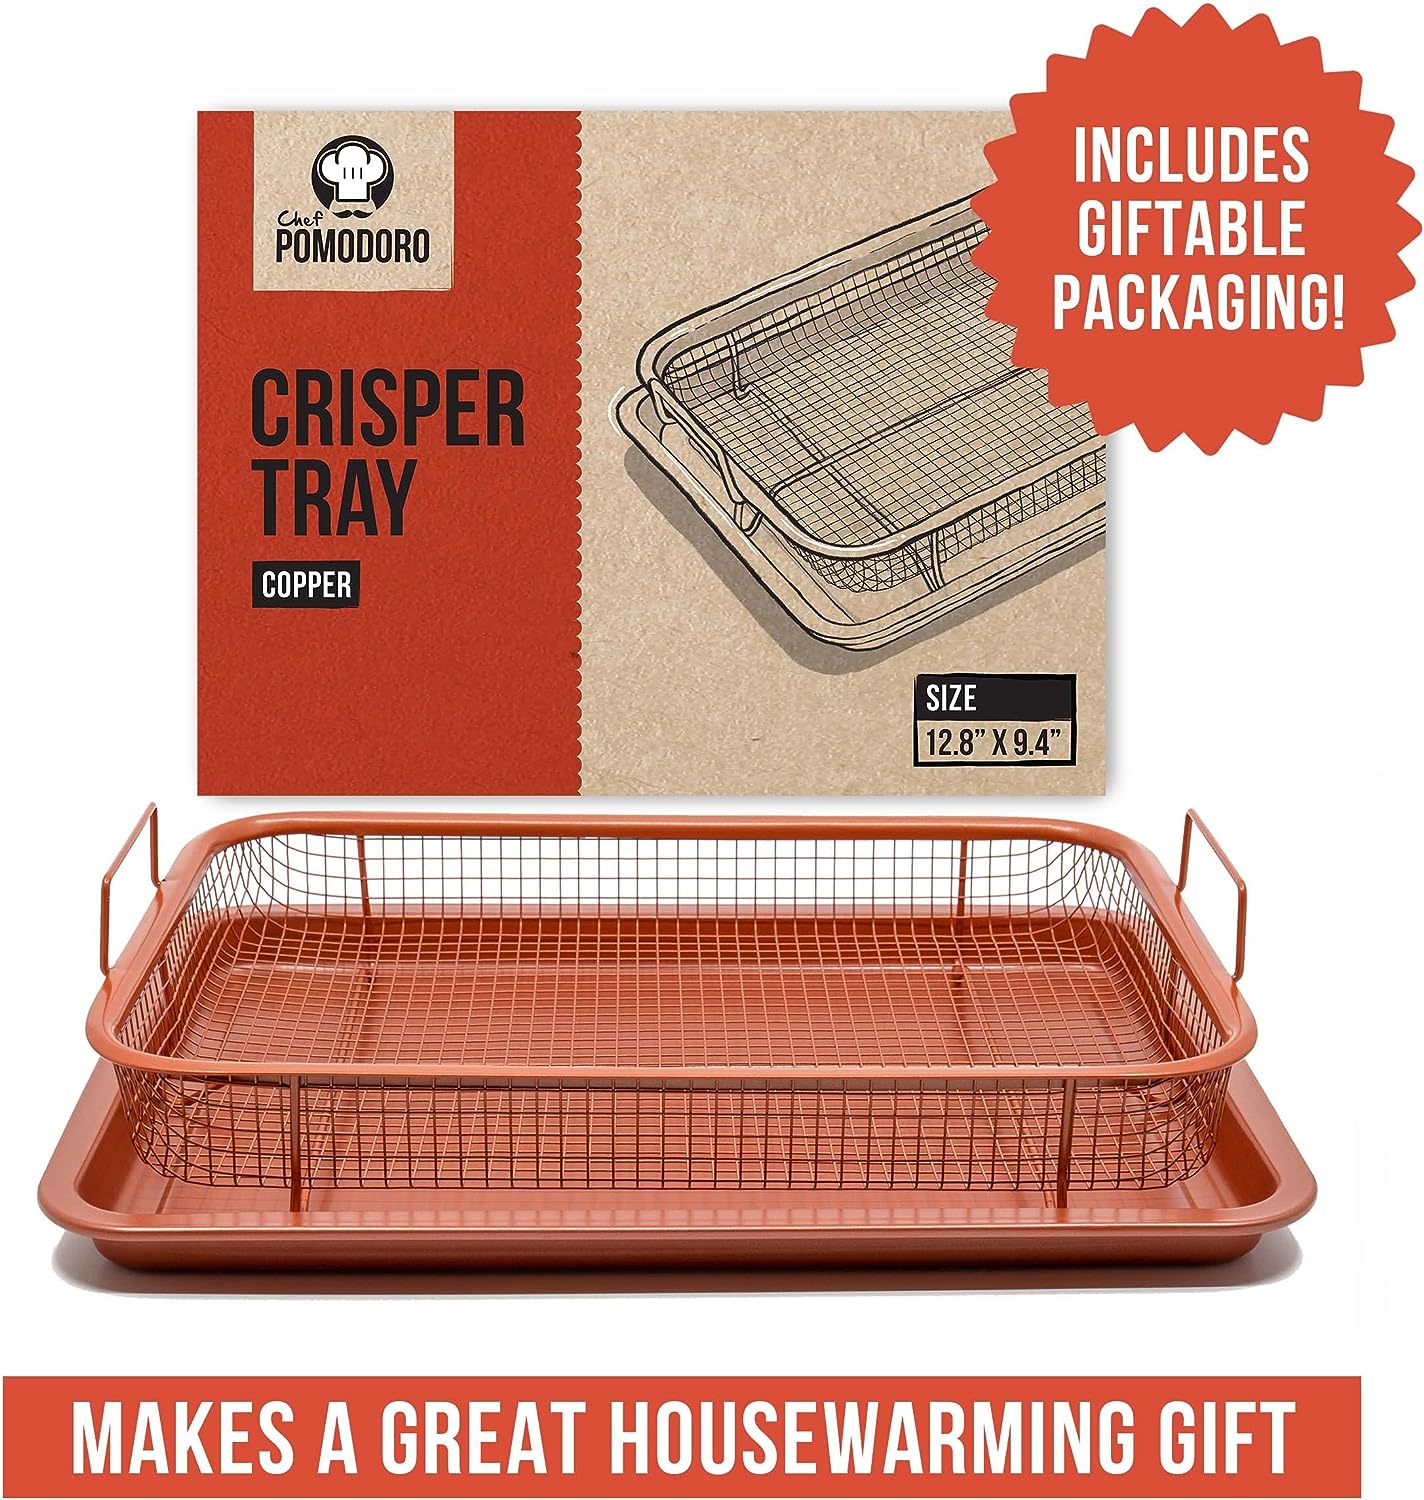 Crisper Tray Set Non Stick Cookie Sheet Tray Air Fry Pan Grill